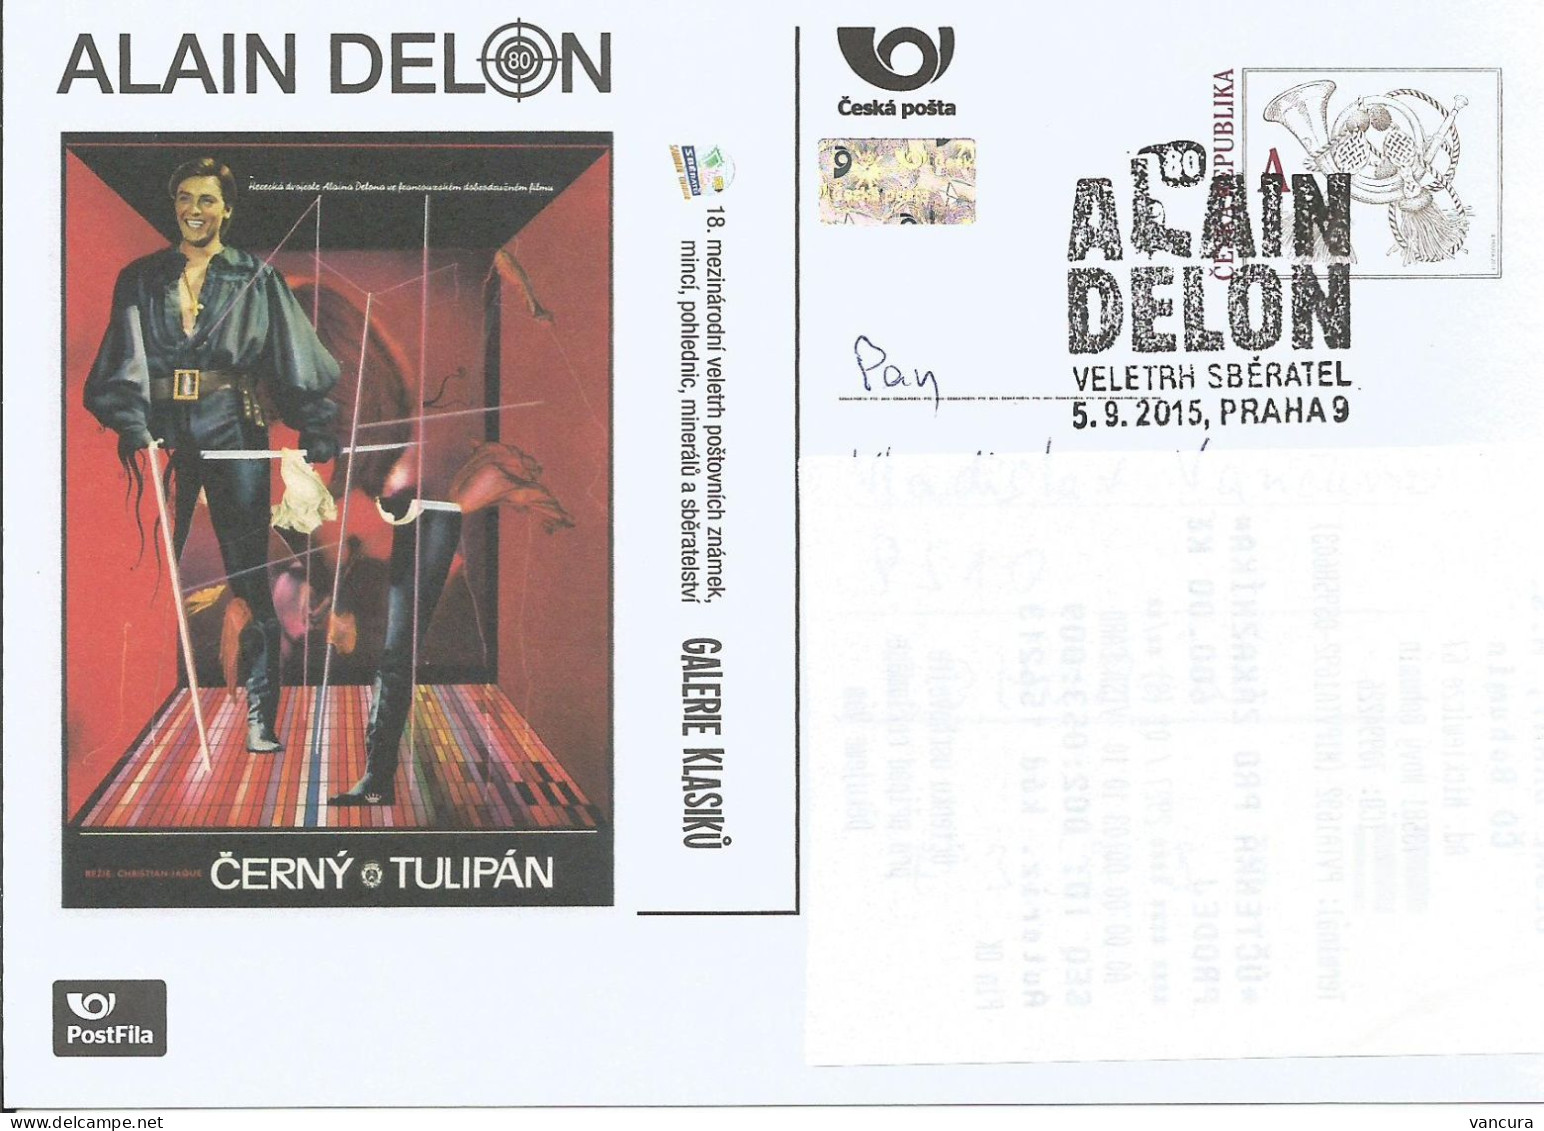 Postfila Card Czech Republic Sberatel Prague 2015 Alain Delon - Postcards